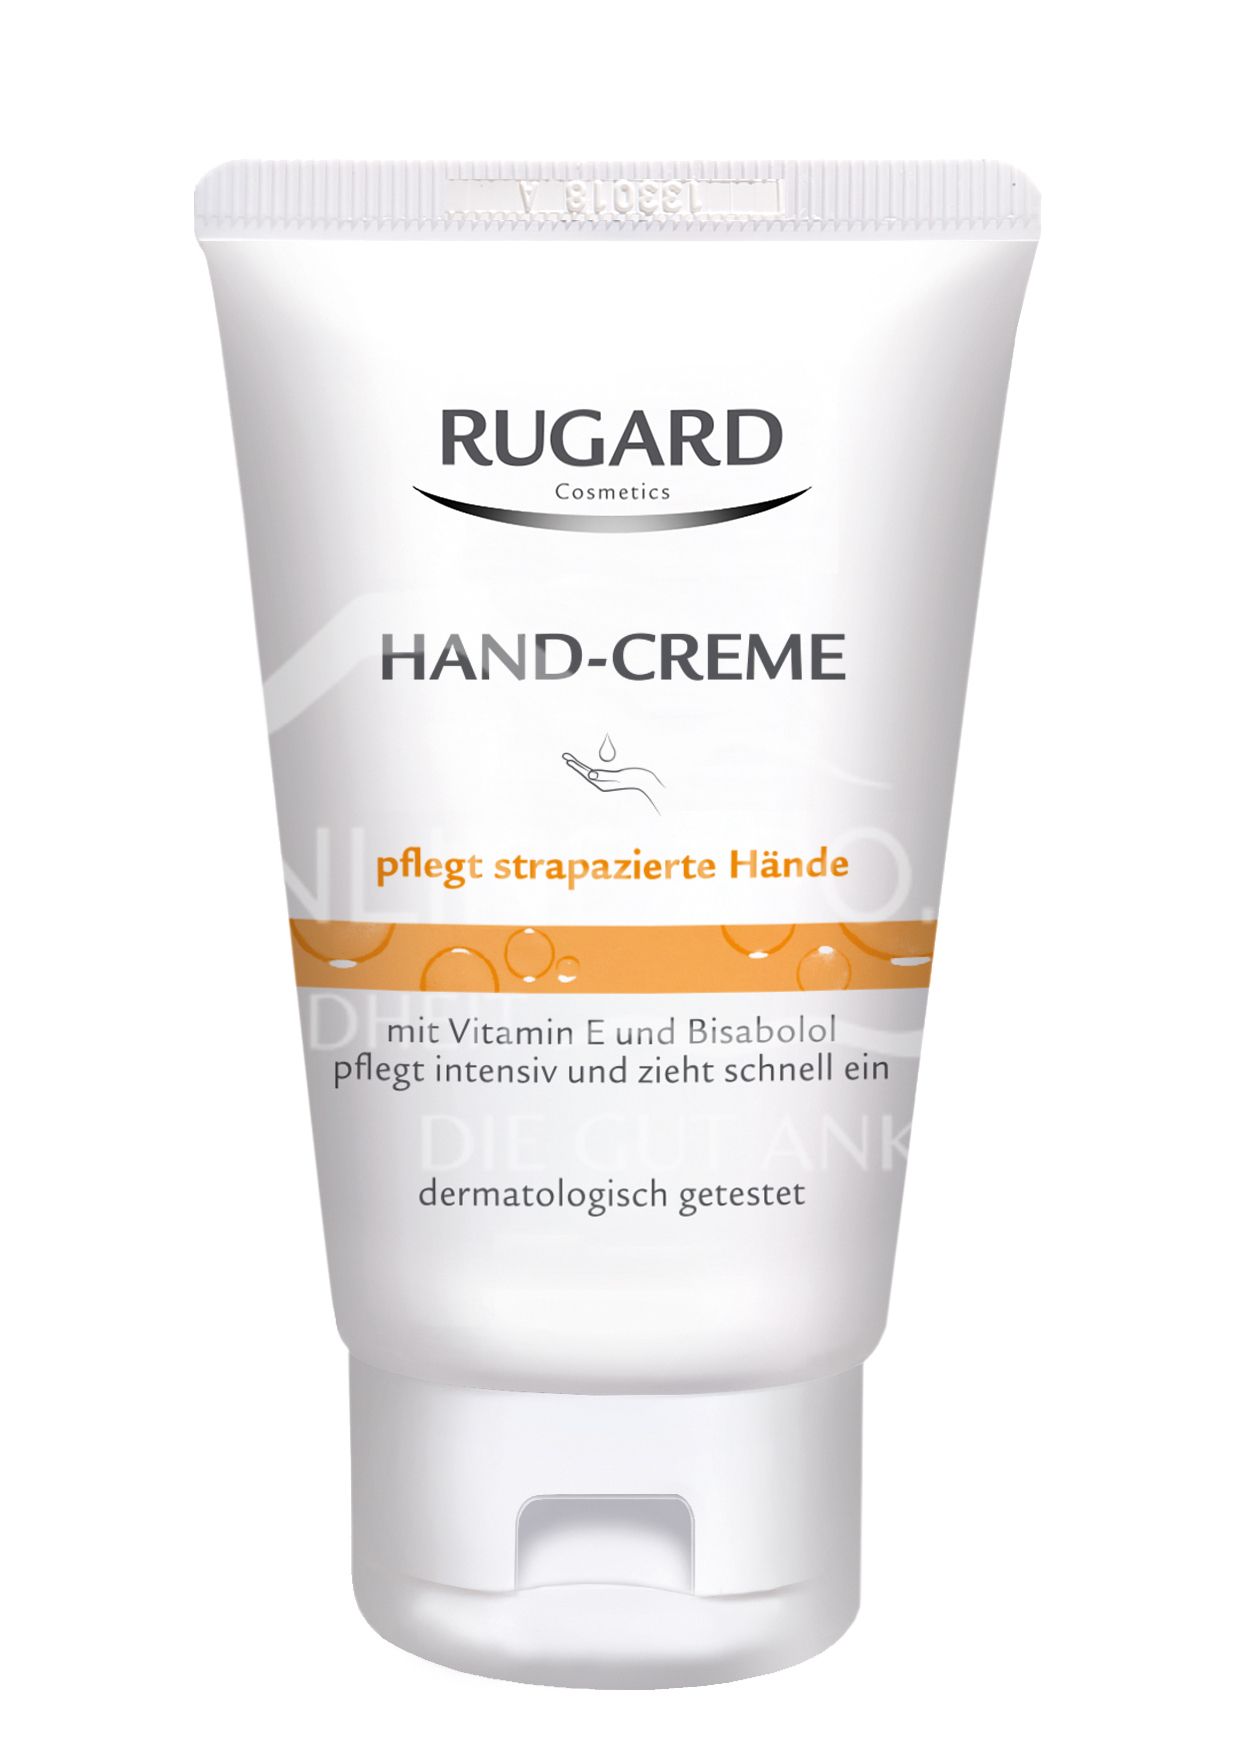 Rugard Hand-Creme